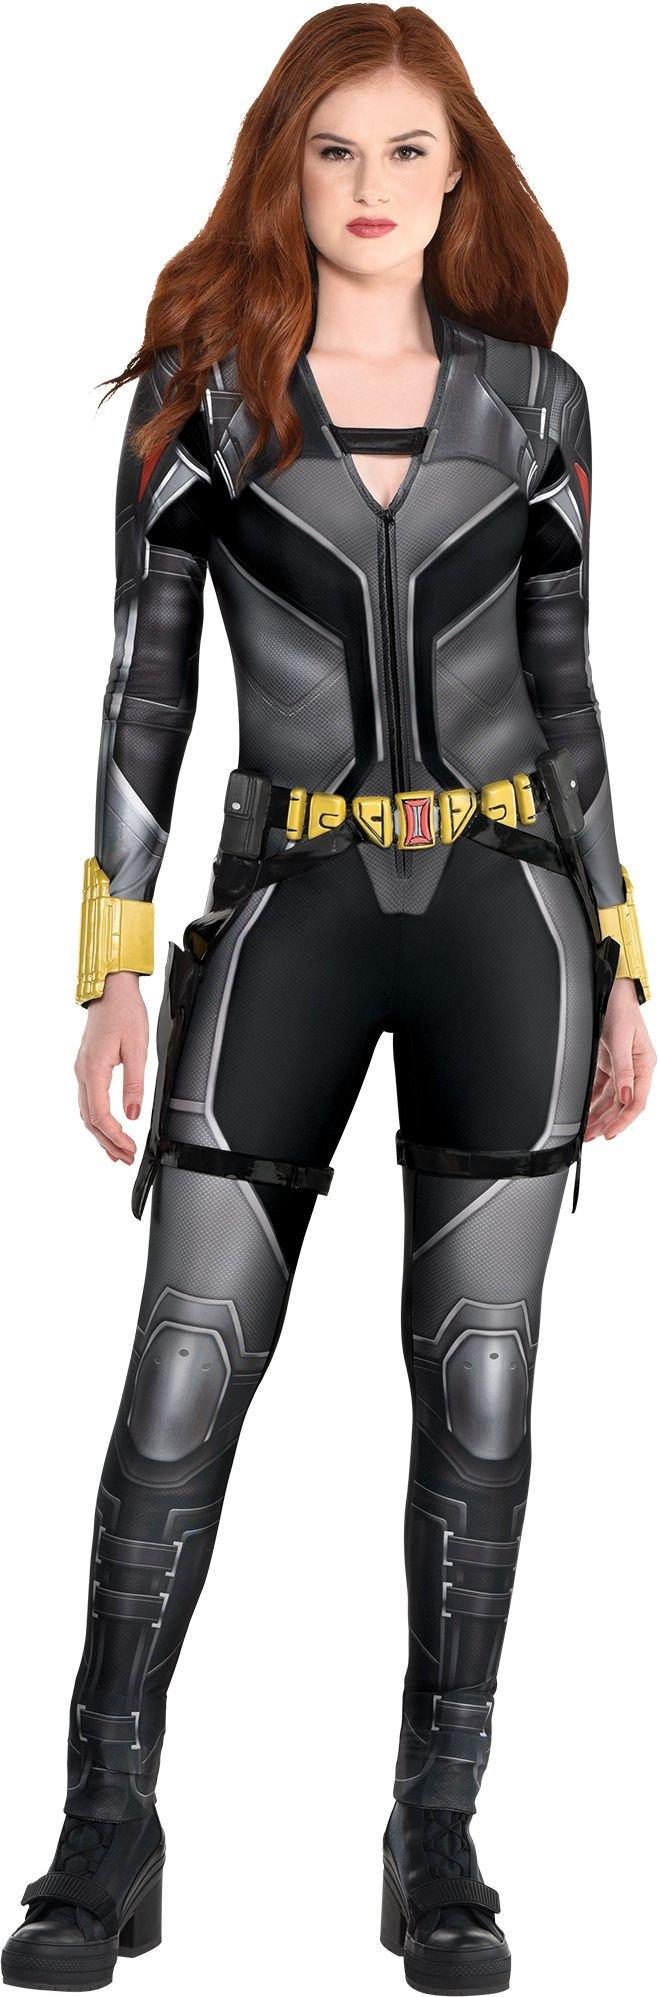 Black Widow Costume for Adults - Black Widow Movie